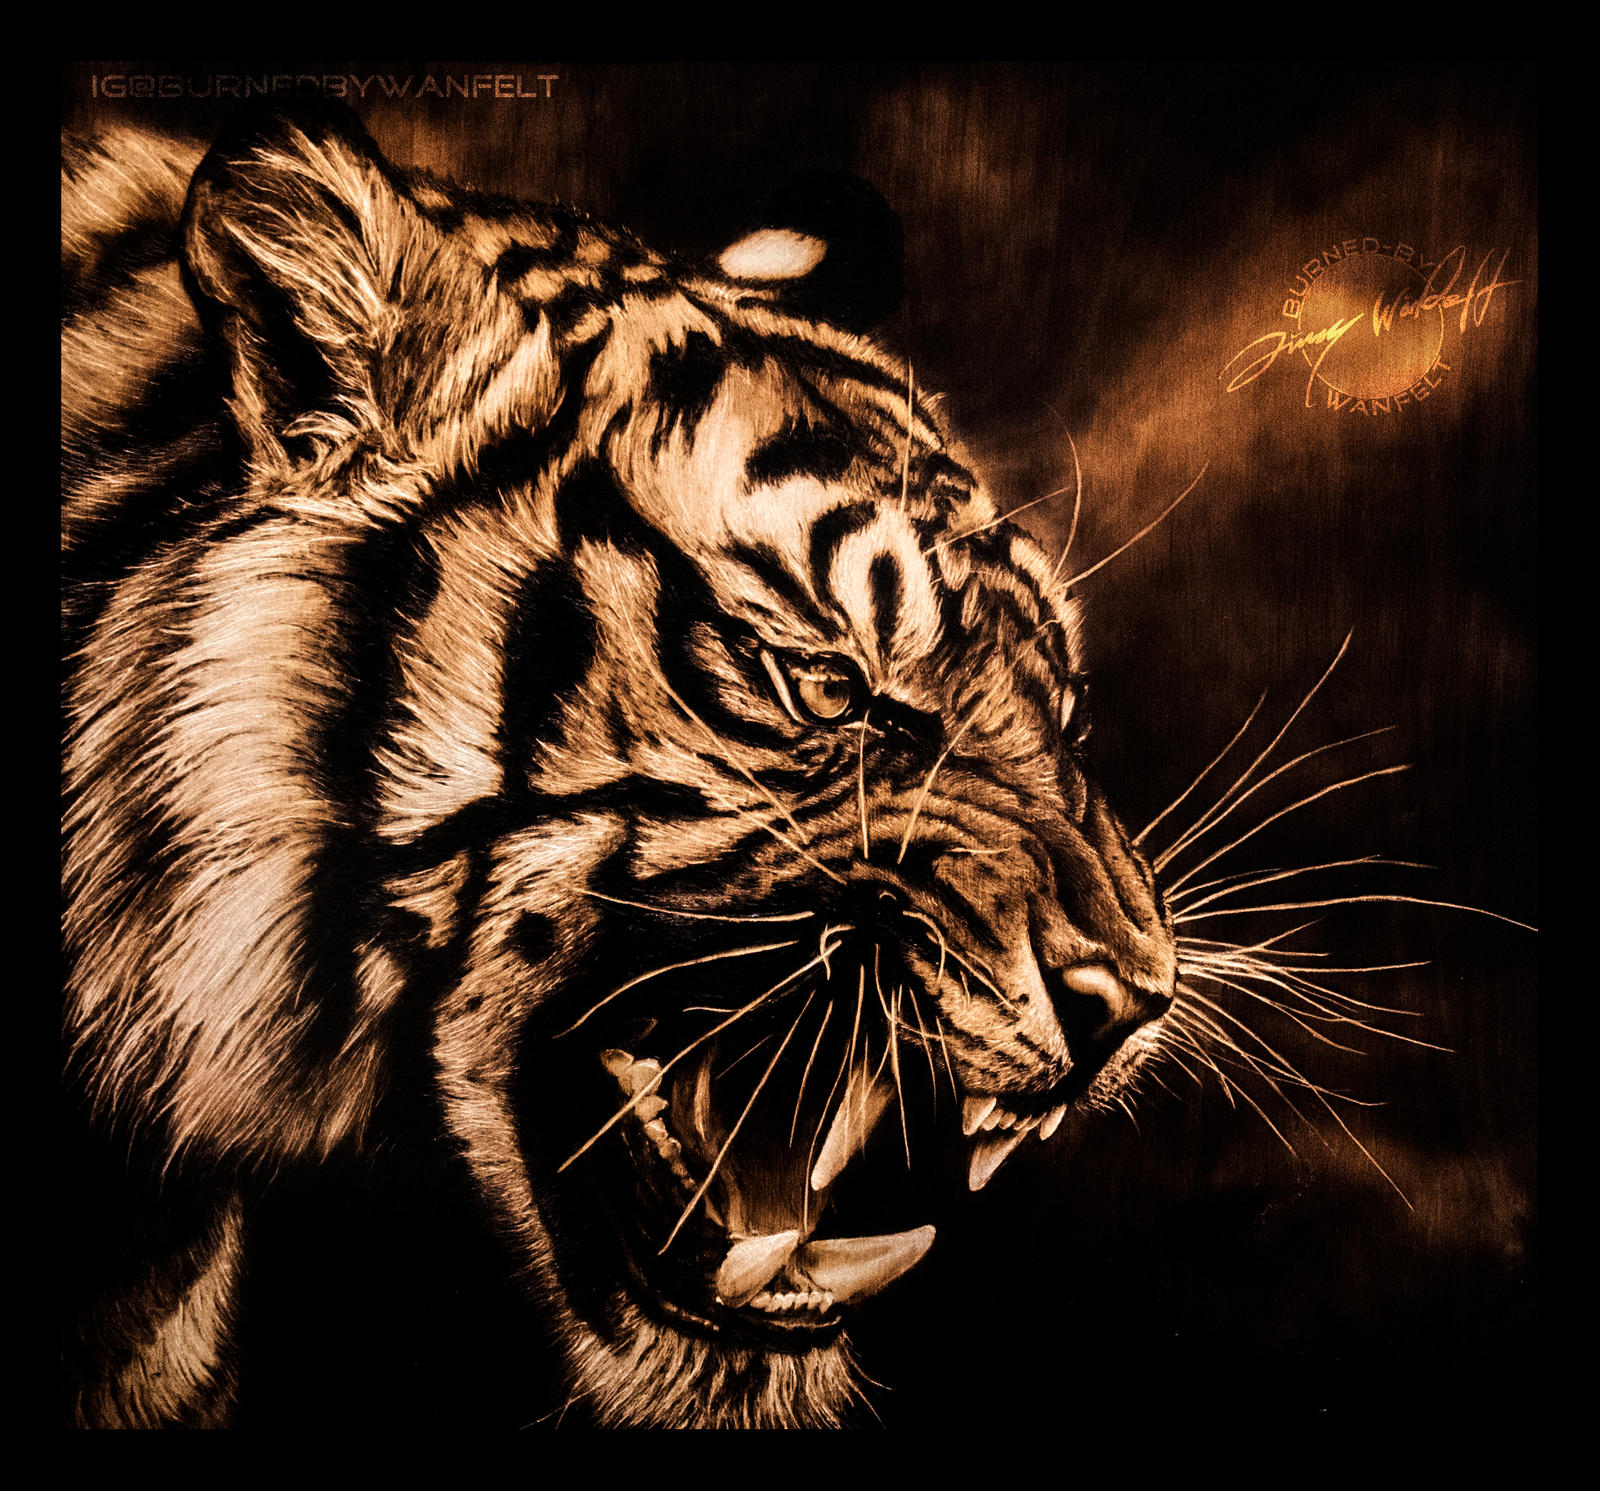 Tiger on fire by MuppZA on DeviantArt